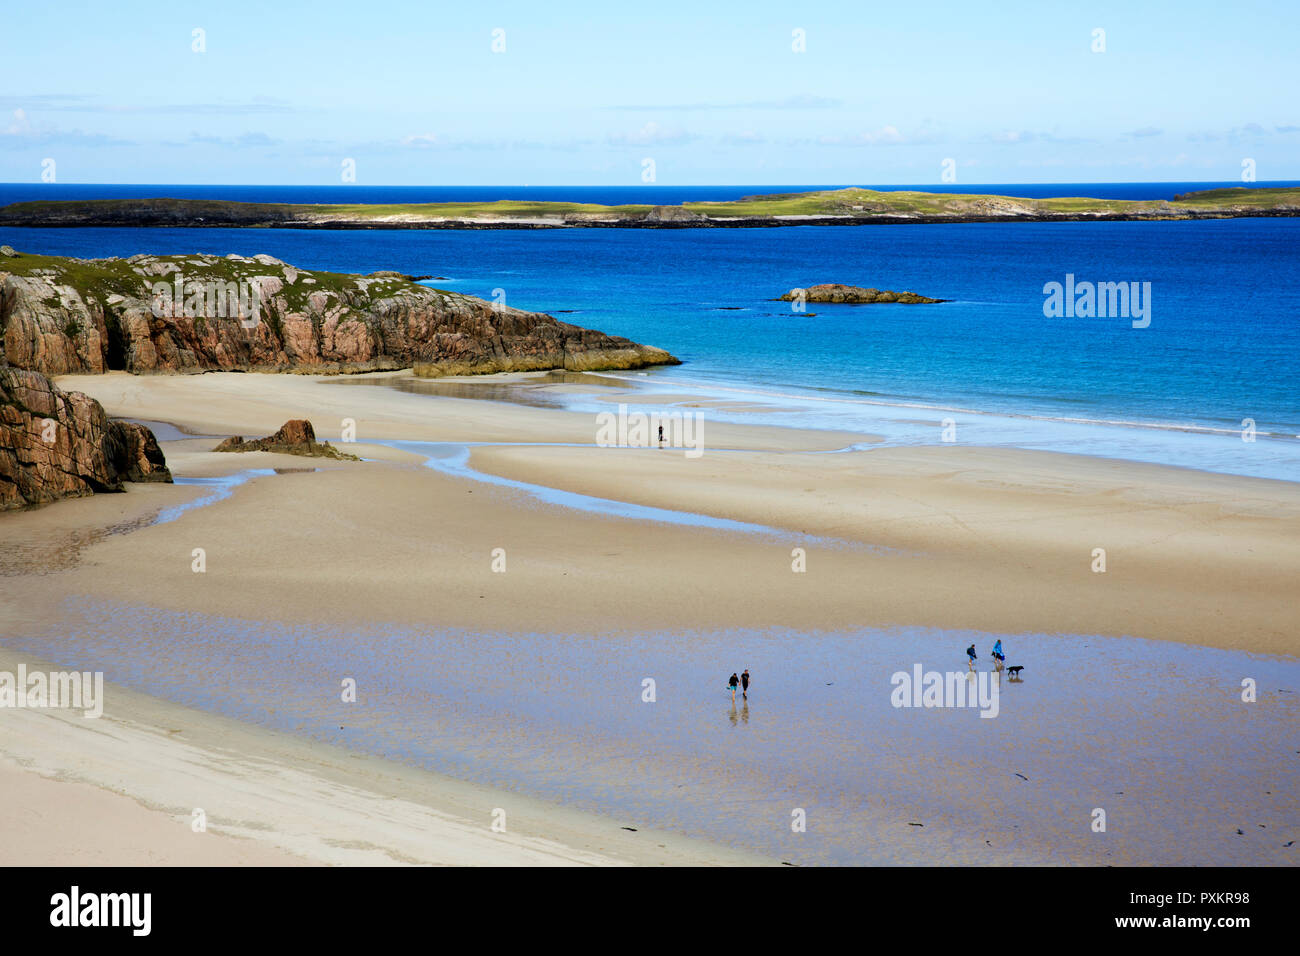 The beaches at Durness peninsula, Scotland, Highlands, United Kingdom Stock Photo